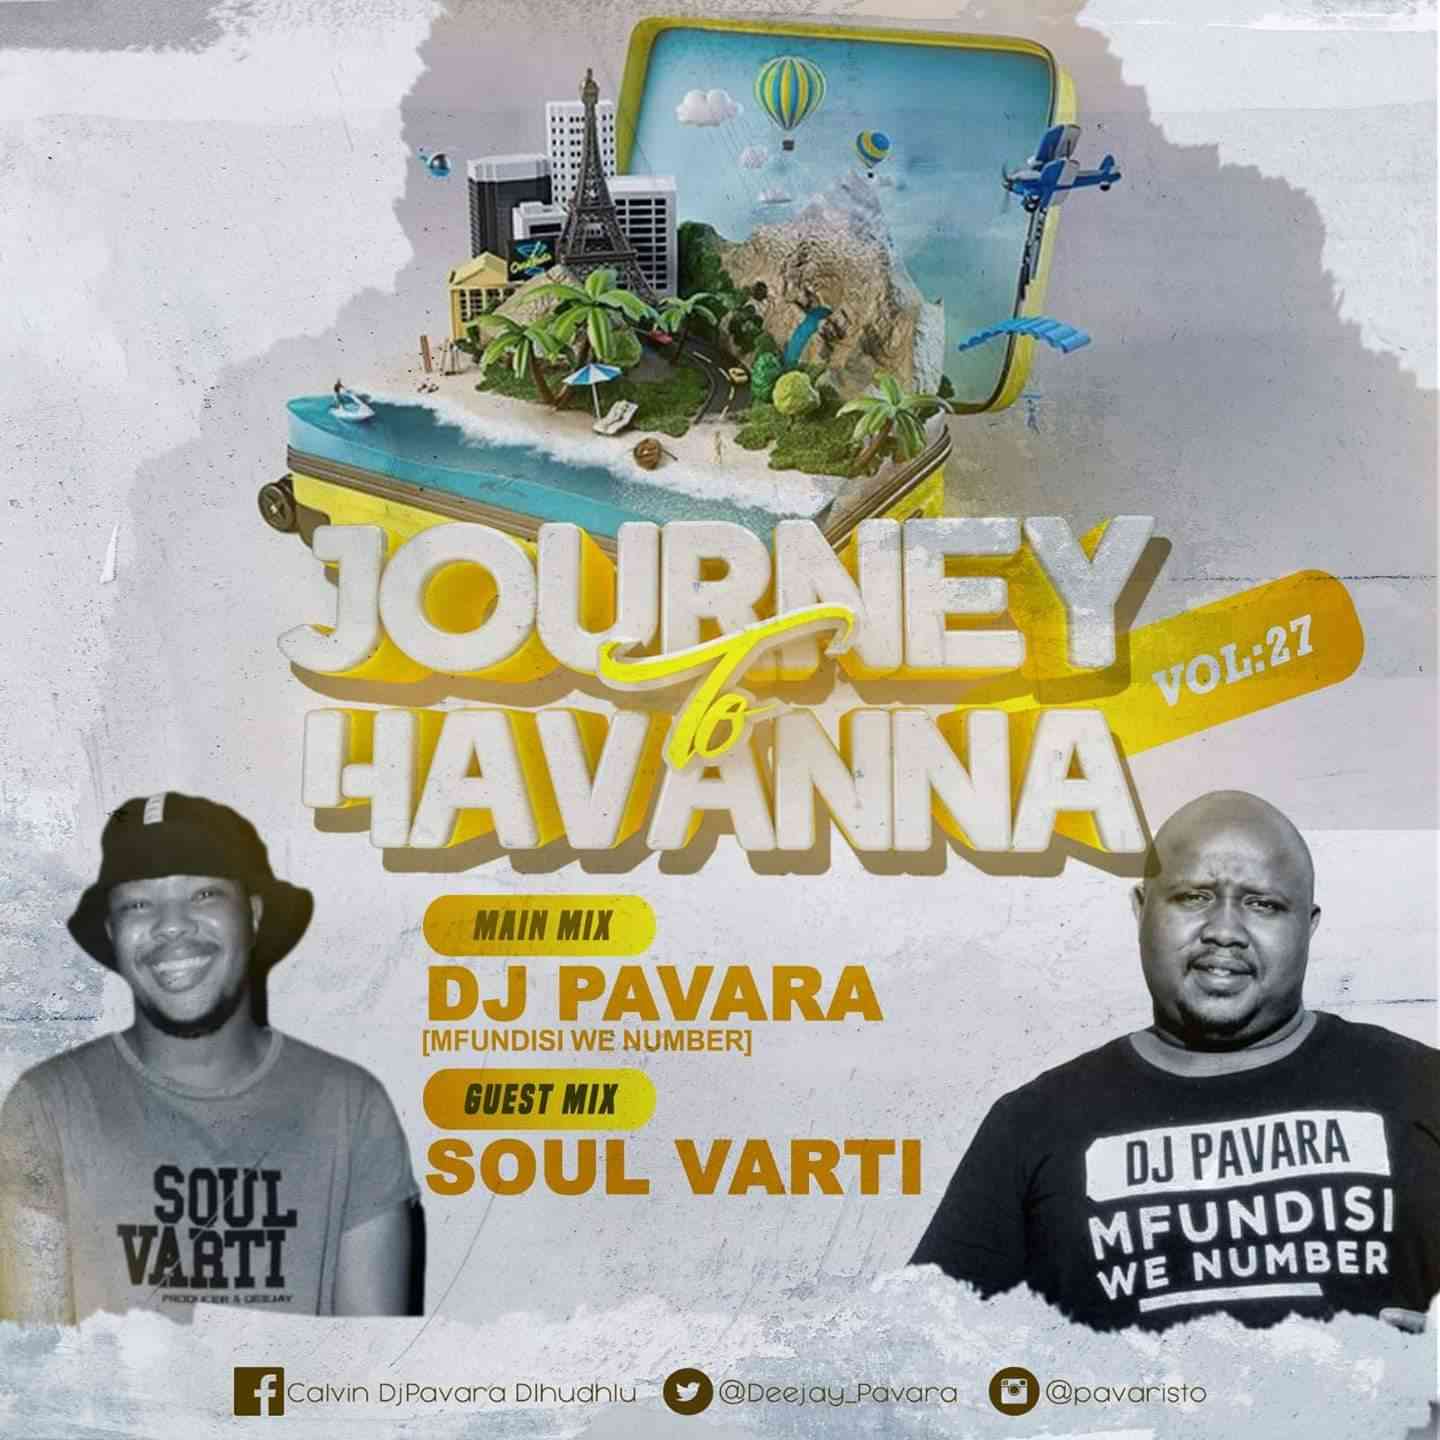 Mfundisi we Number (Dj Pavara) - Journey to Havana Vol. 27 Mix